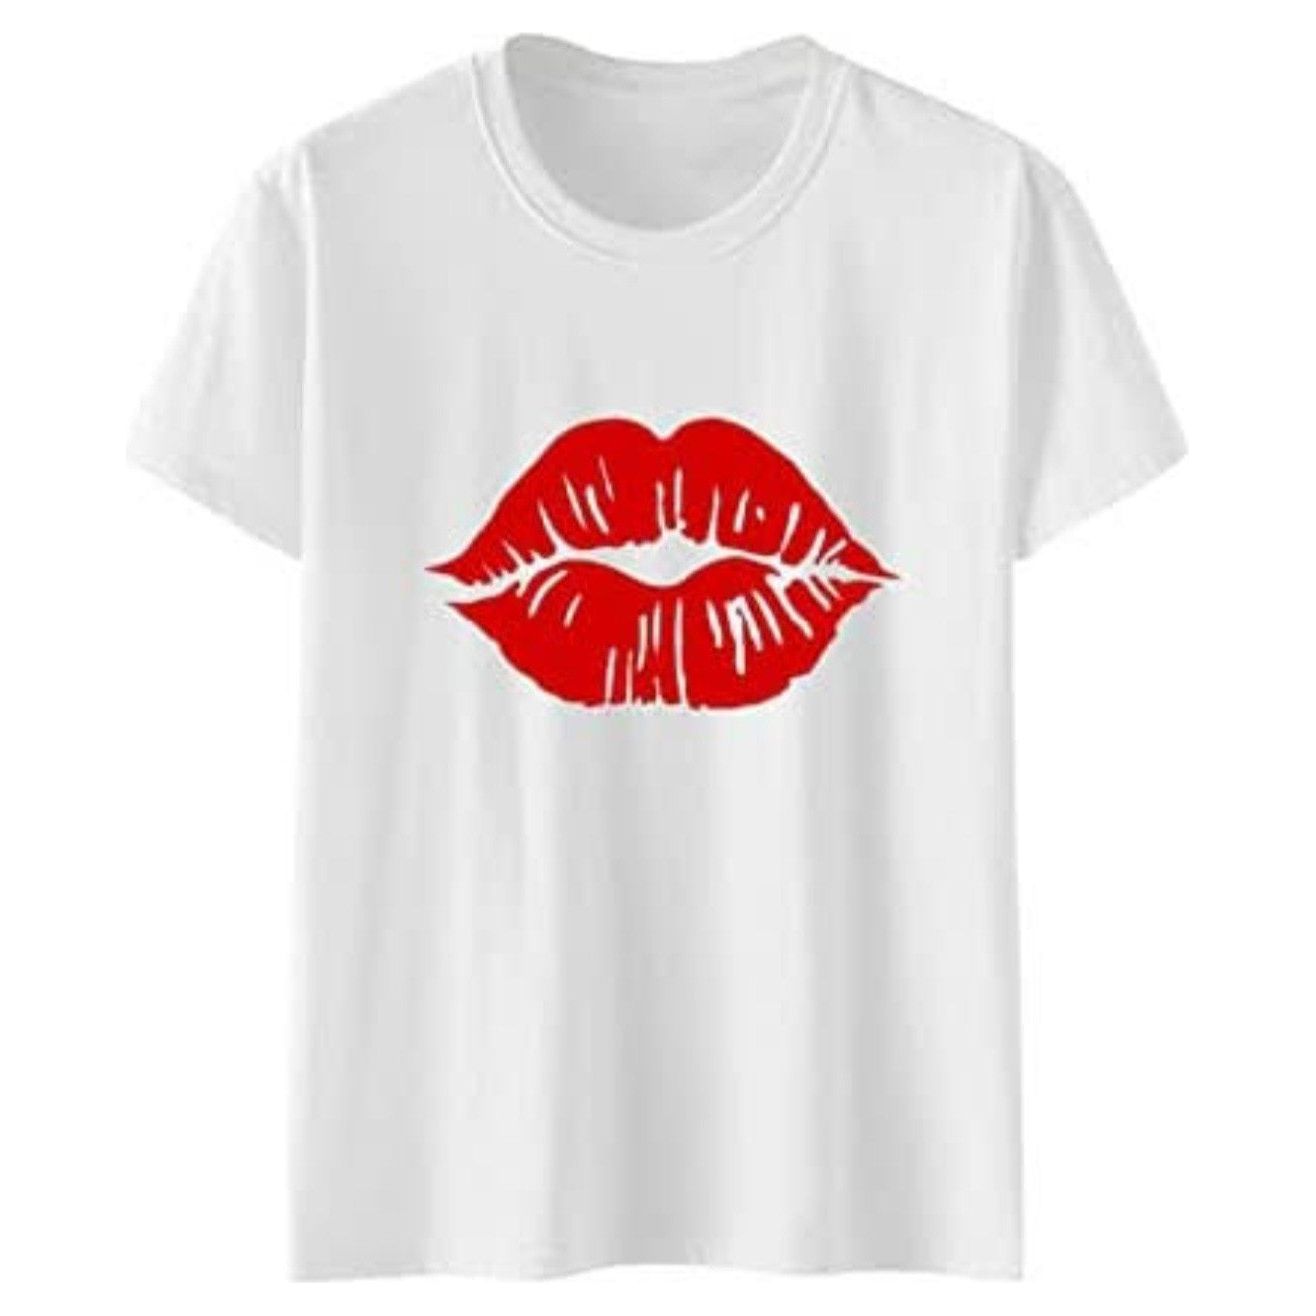 Kiss Me T-shirt